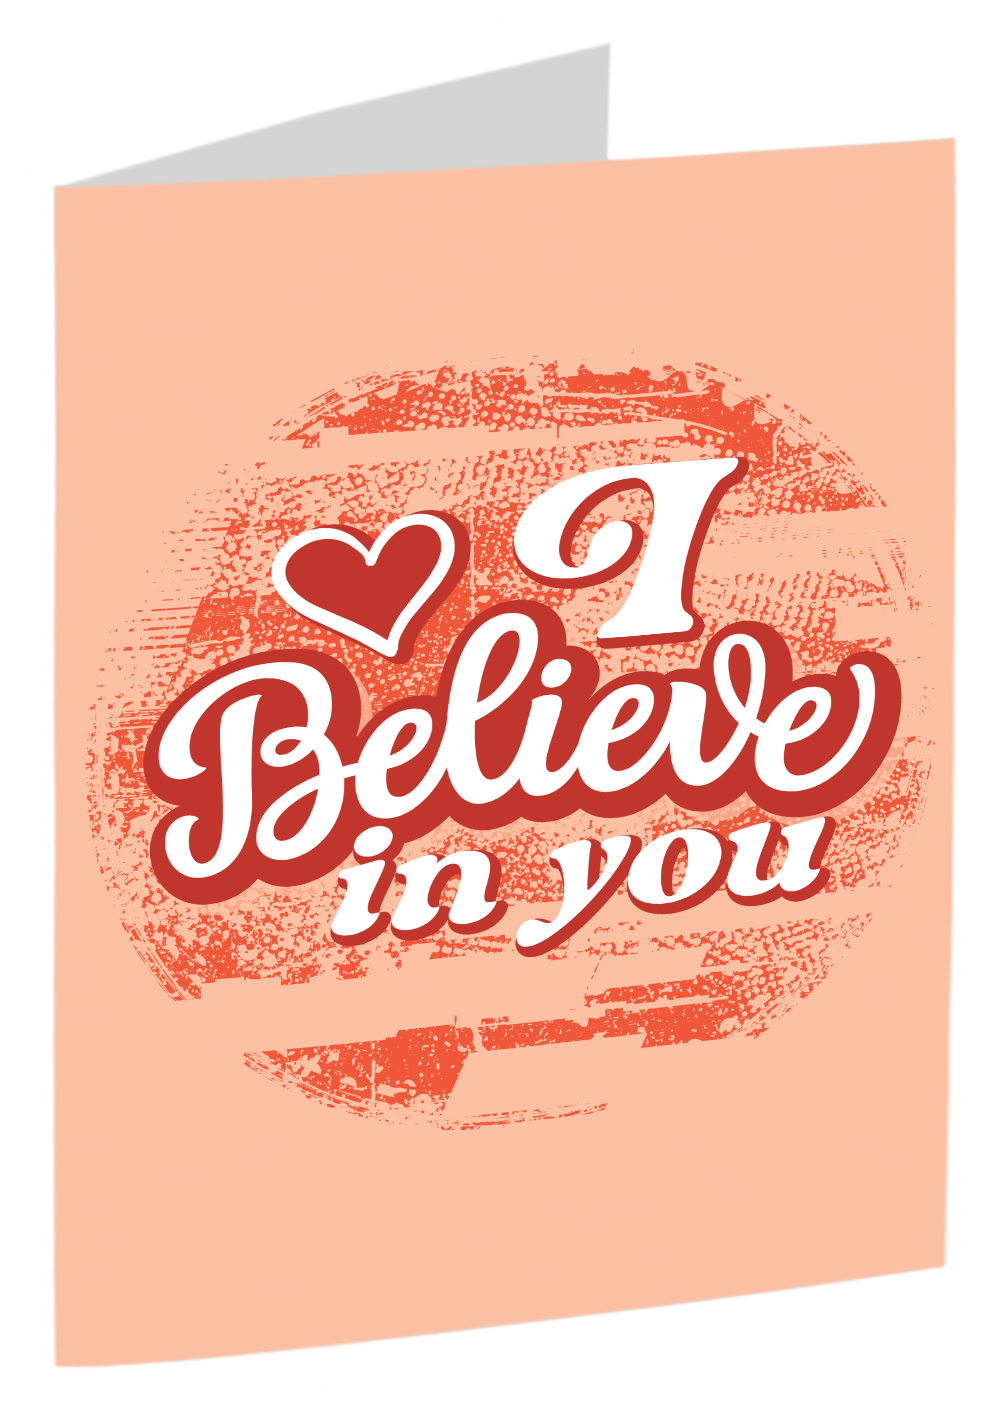 "I Believe In You"